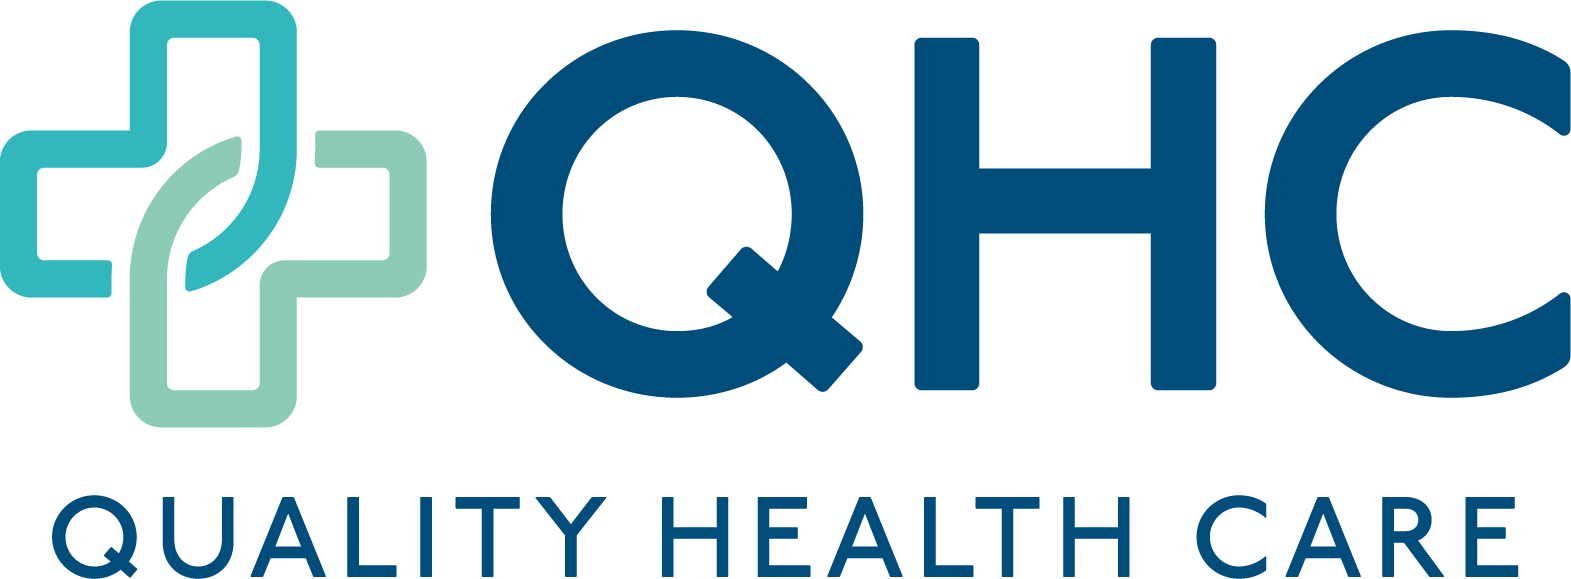 Quality Health Care AS